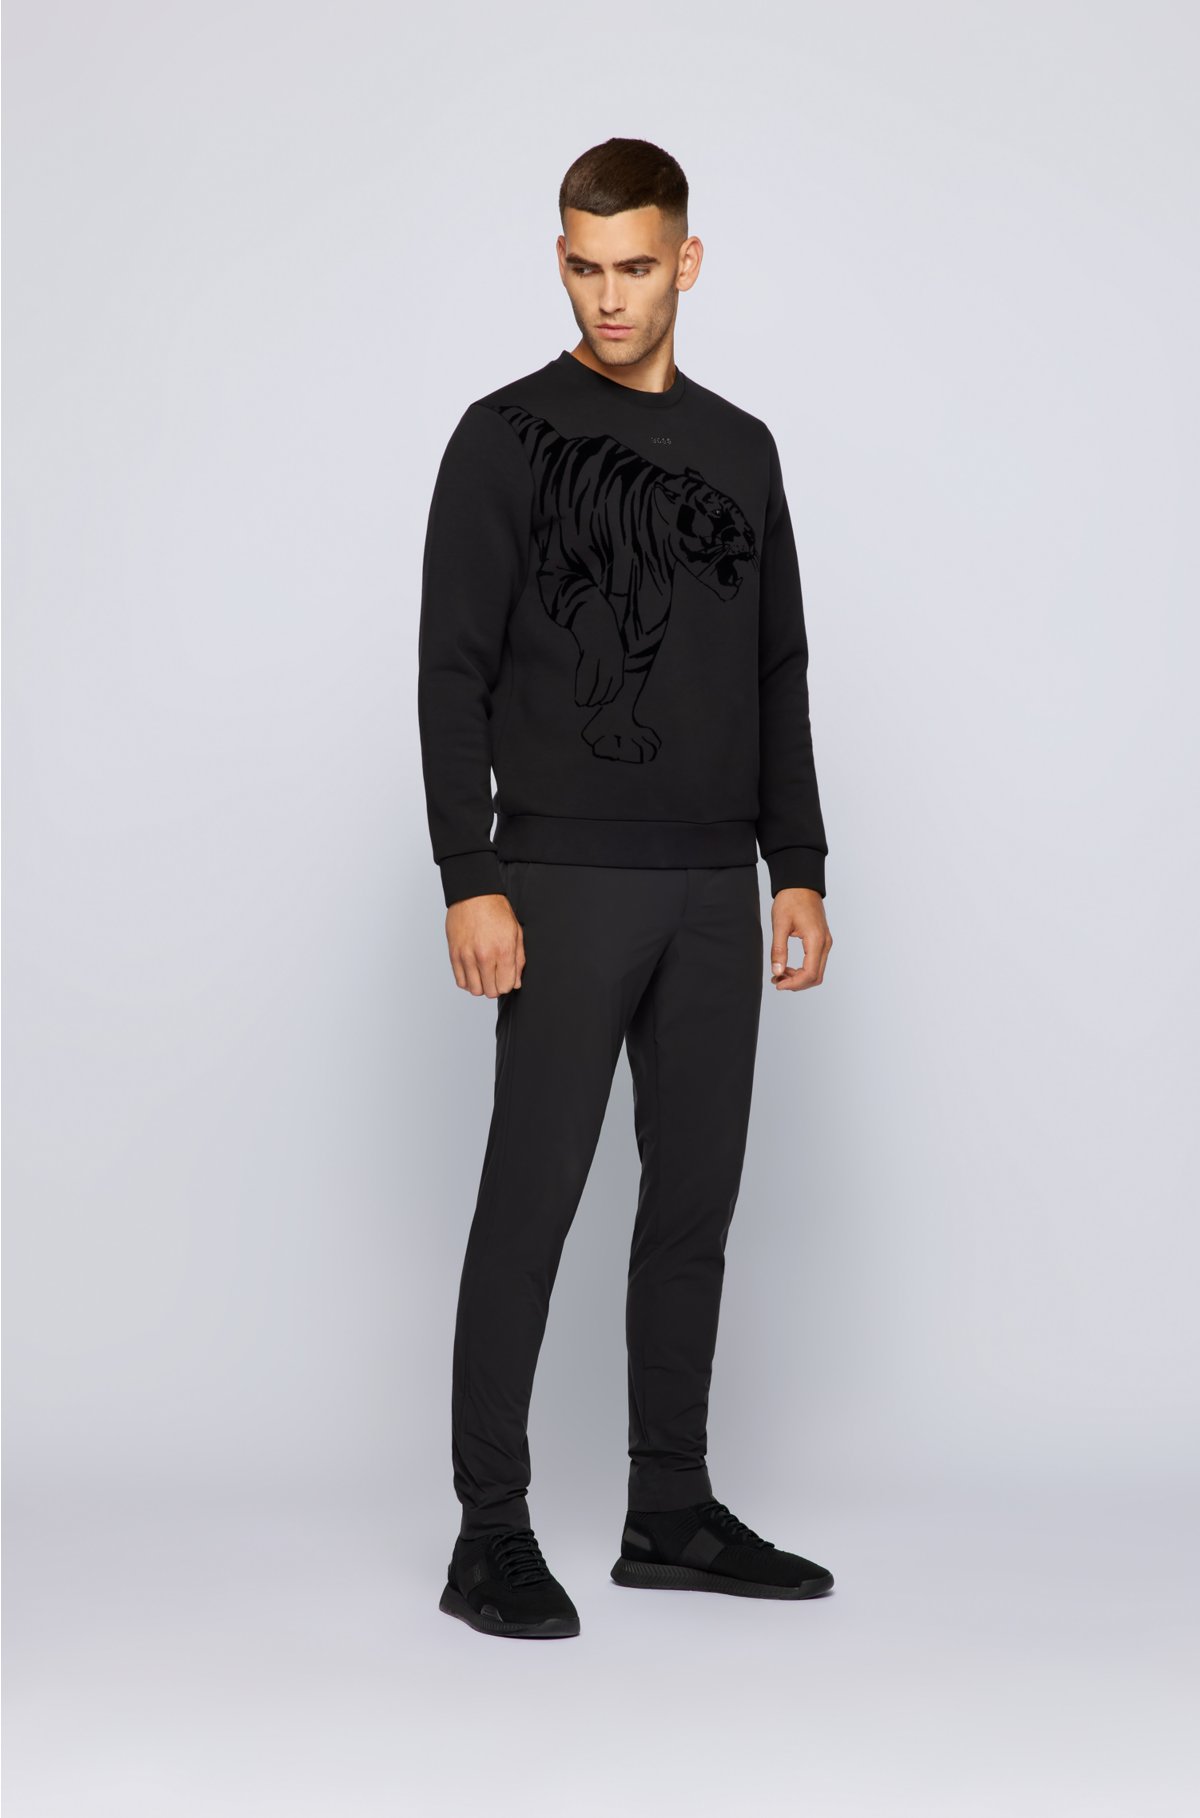 Shop4Ever Men's White Tiger Crewneck Sweatshirt X-Large Black